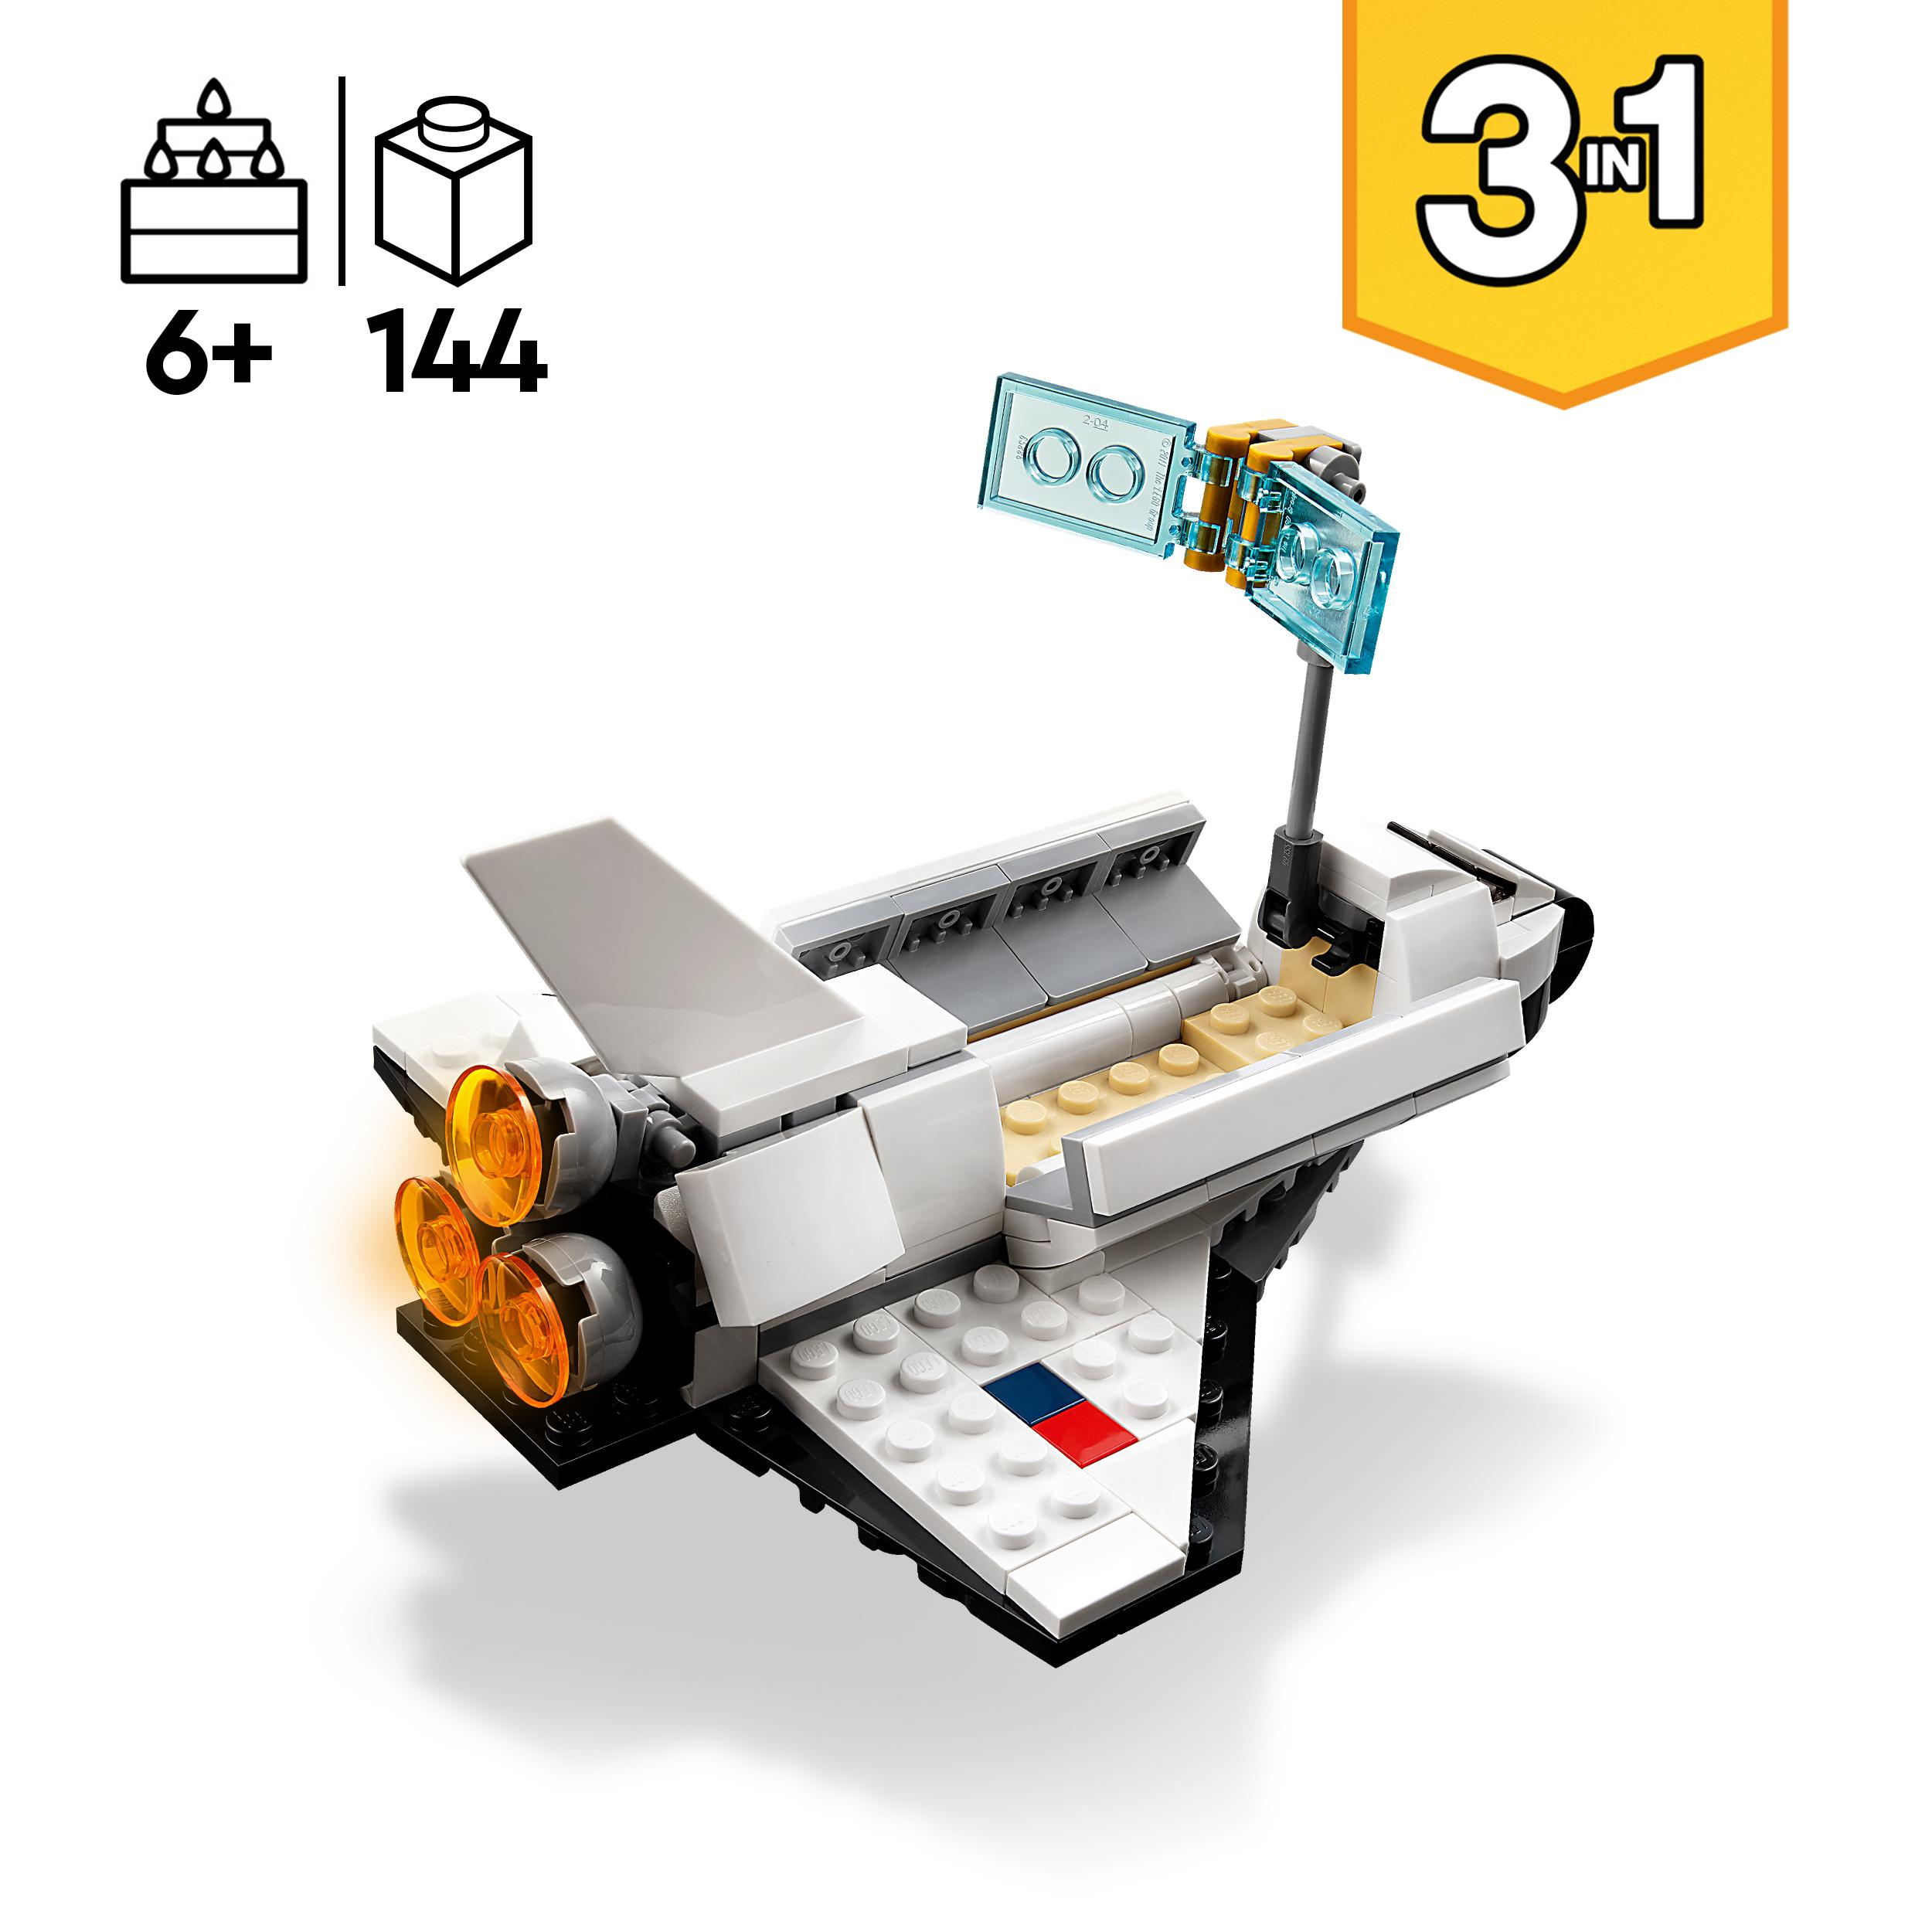 LEGO Creator 31134 Spaceshuttle Mehrfarbig Bausatz